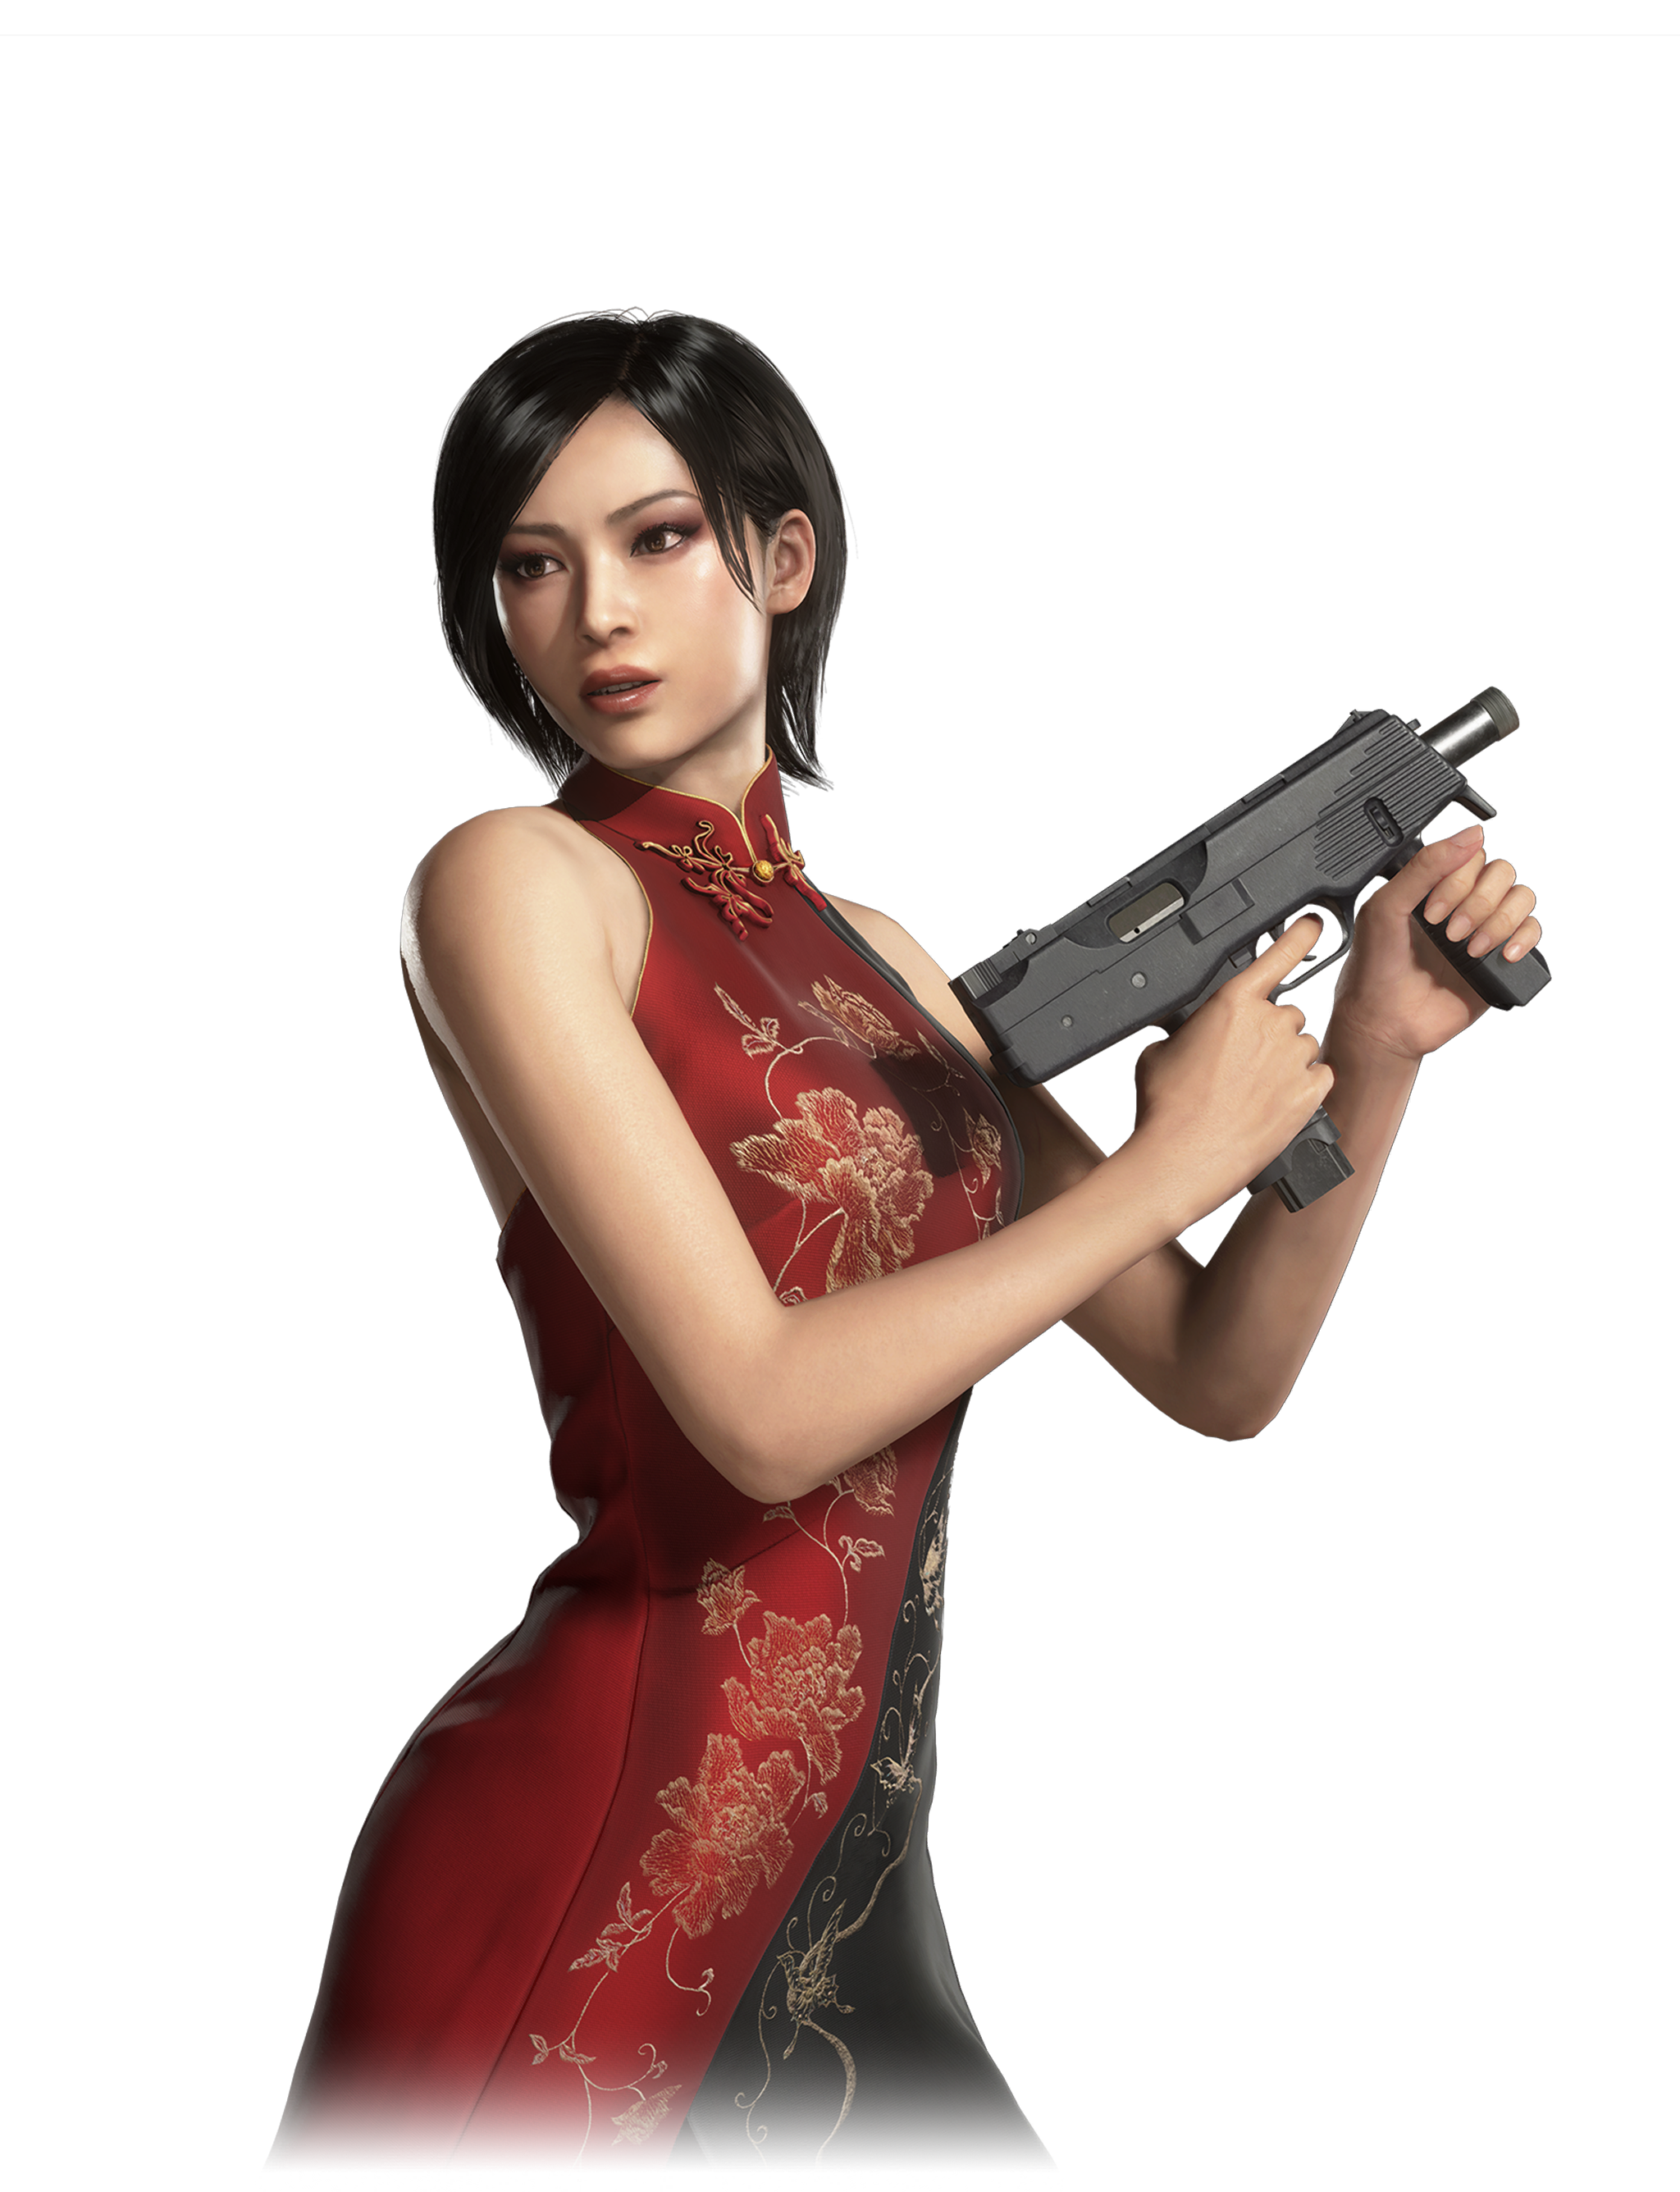 Resident Evil 4 The Mercenaries DLC Stages Revealed in Datamine